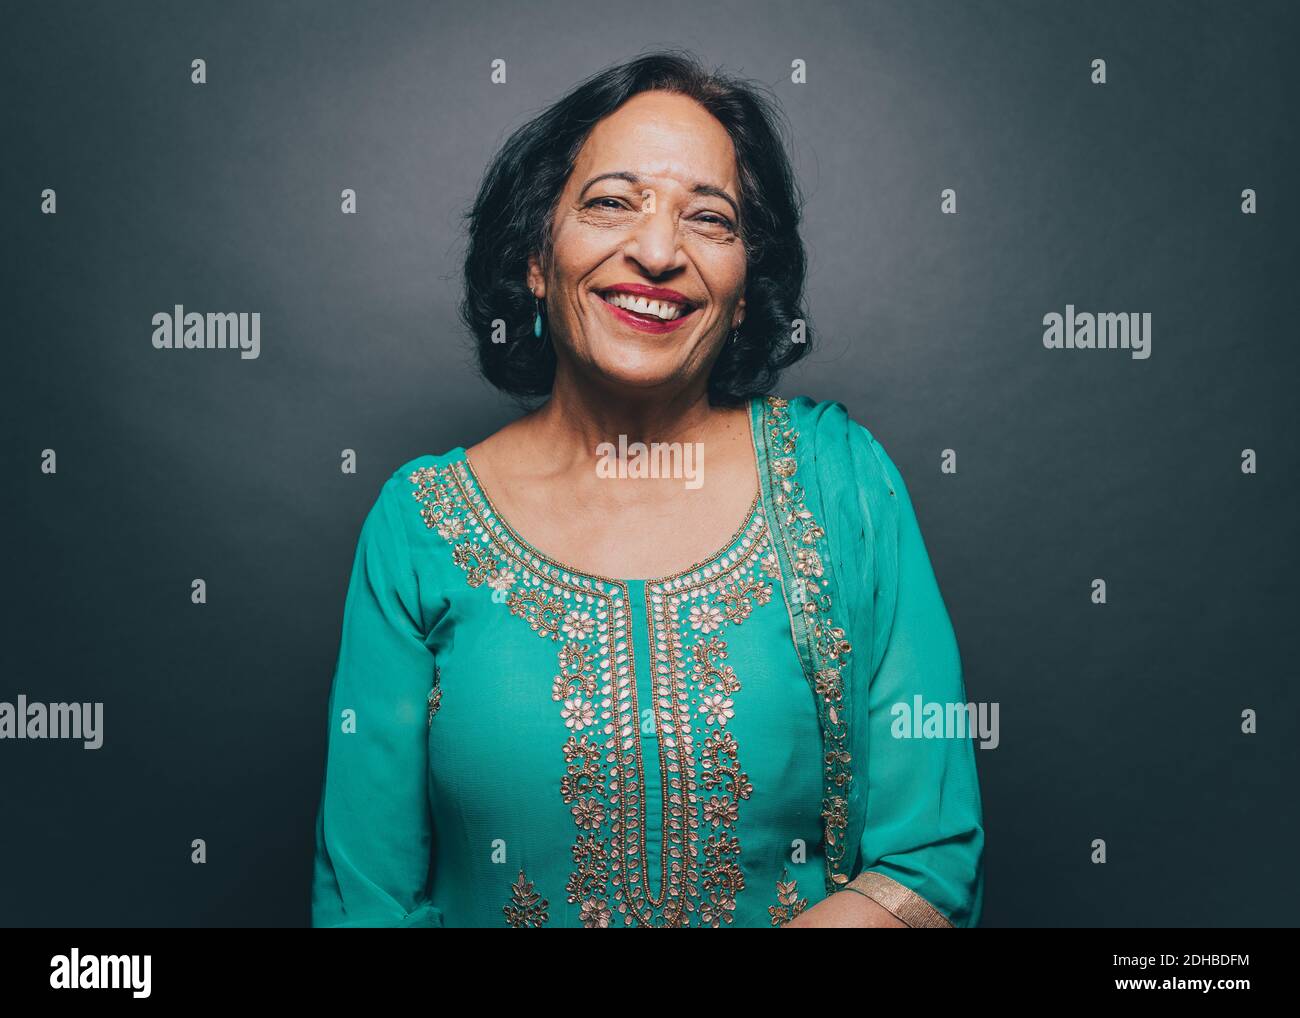 Portrait of smiling senior woman wearing salwar kameez against gray background Stock Photo